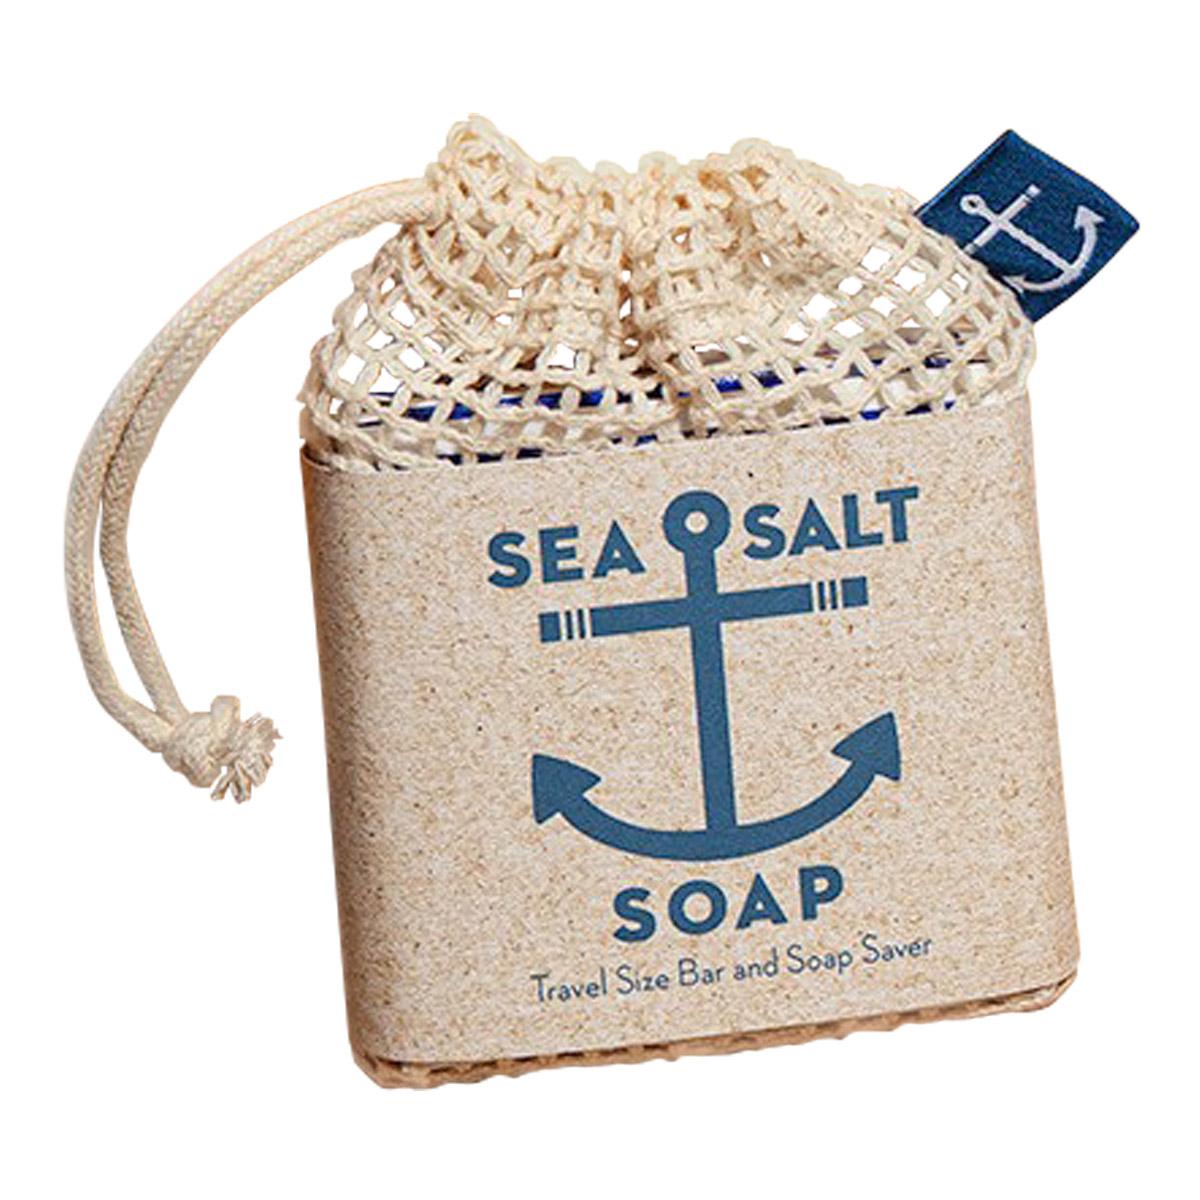 Primary image of Travel Sea Salt Soap + Soap Saver